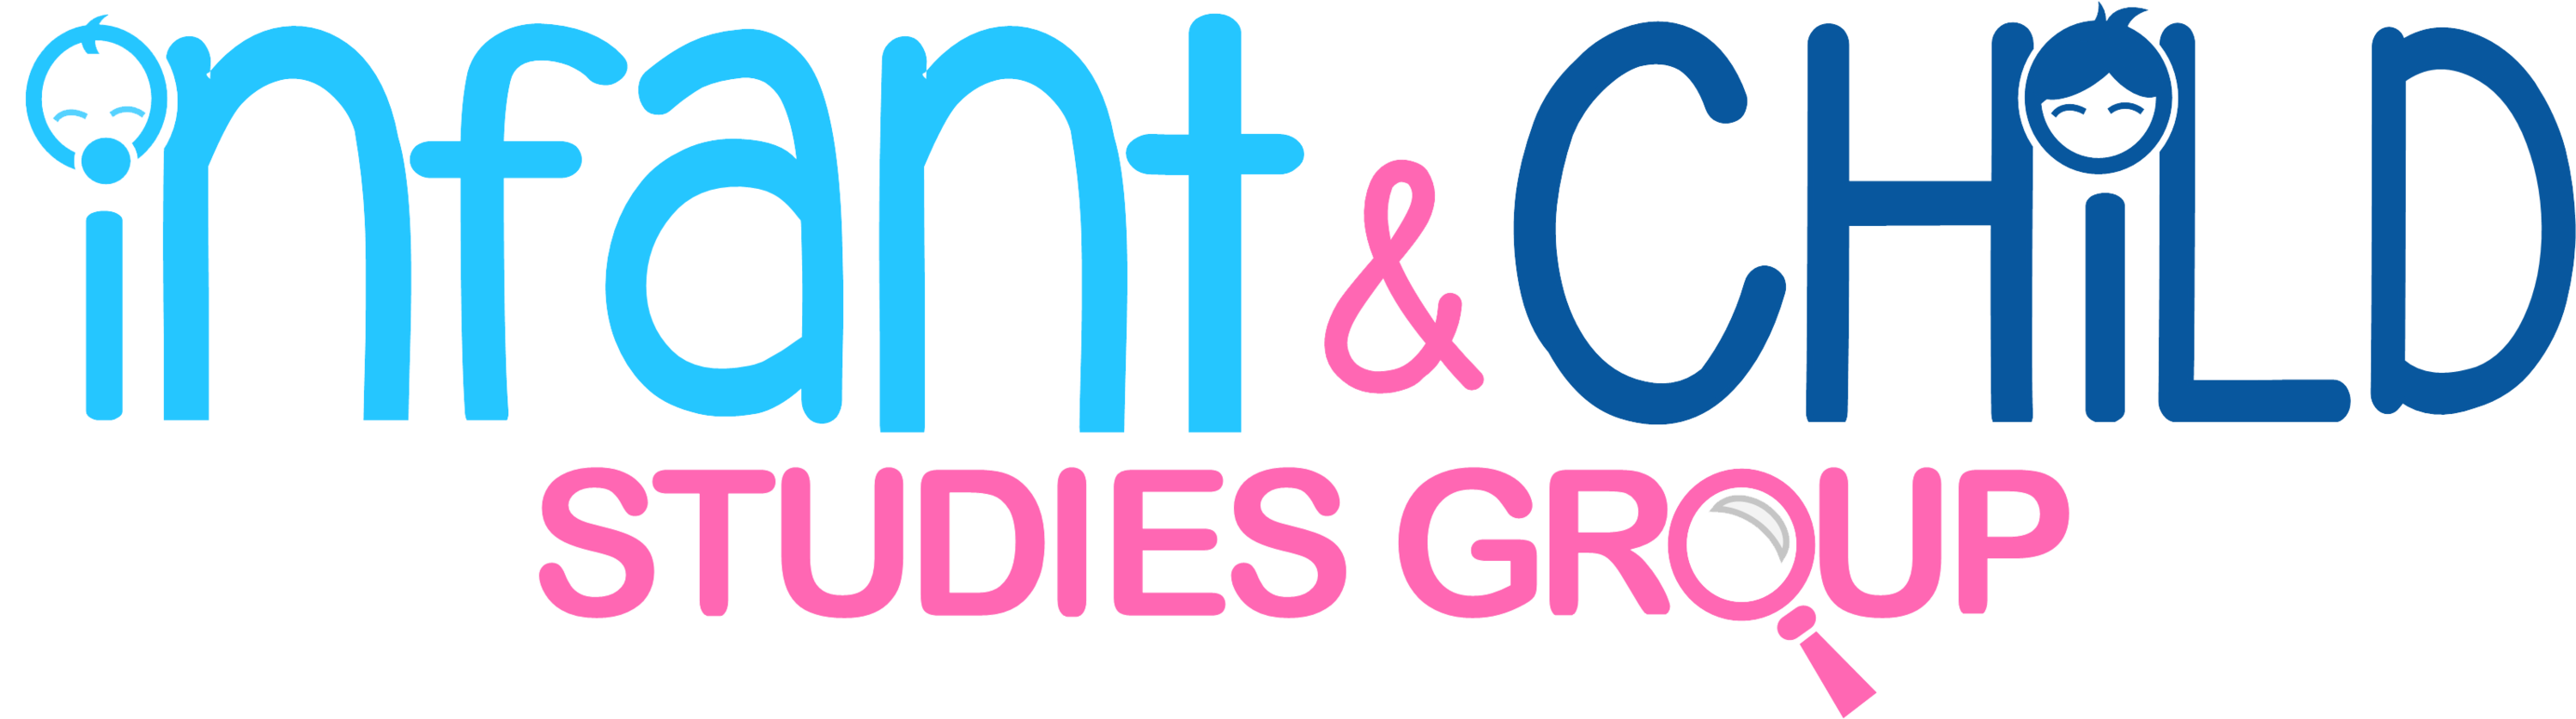 Infant studies group logo